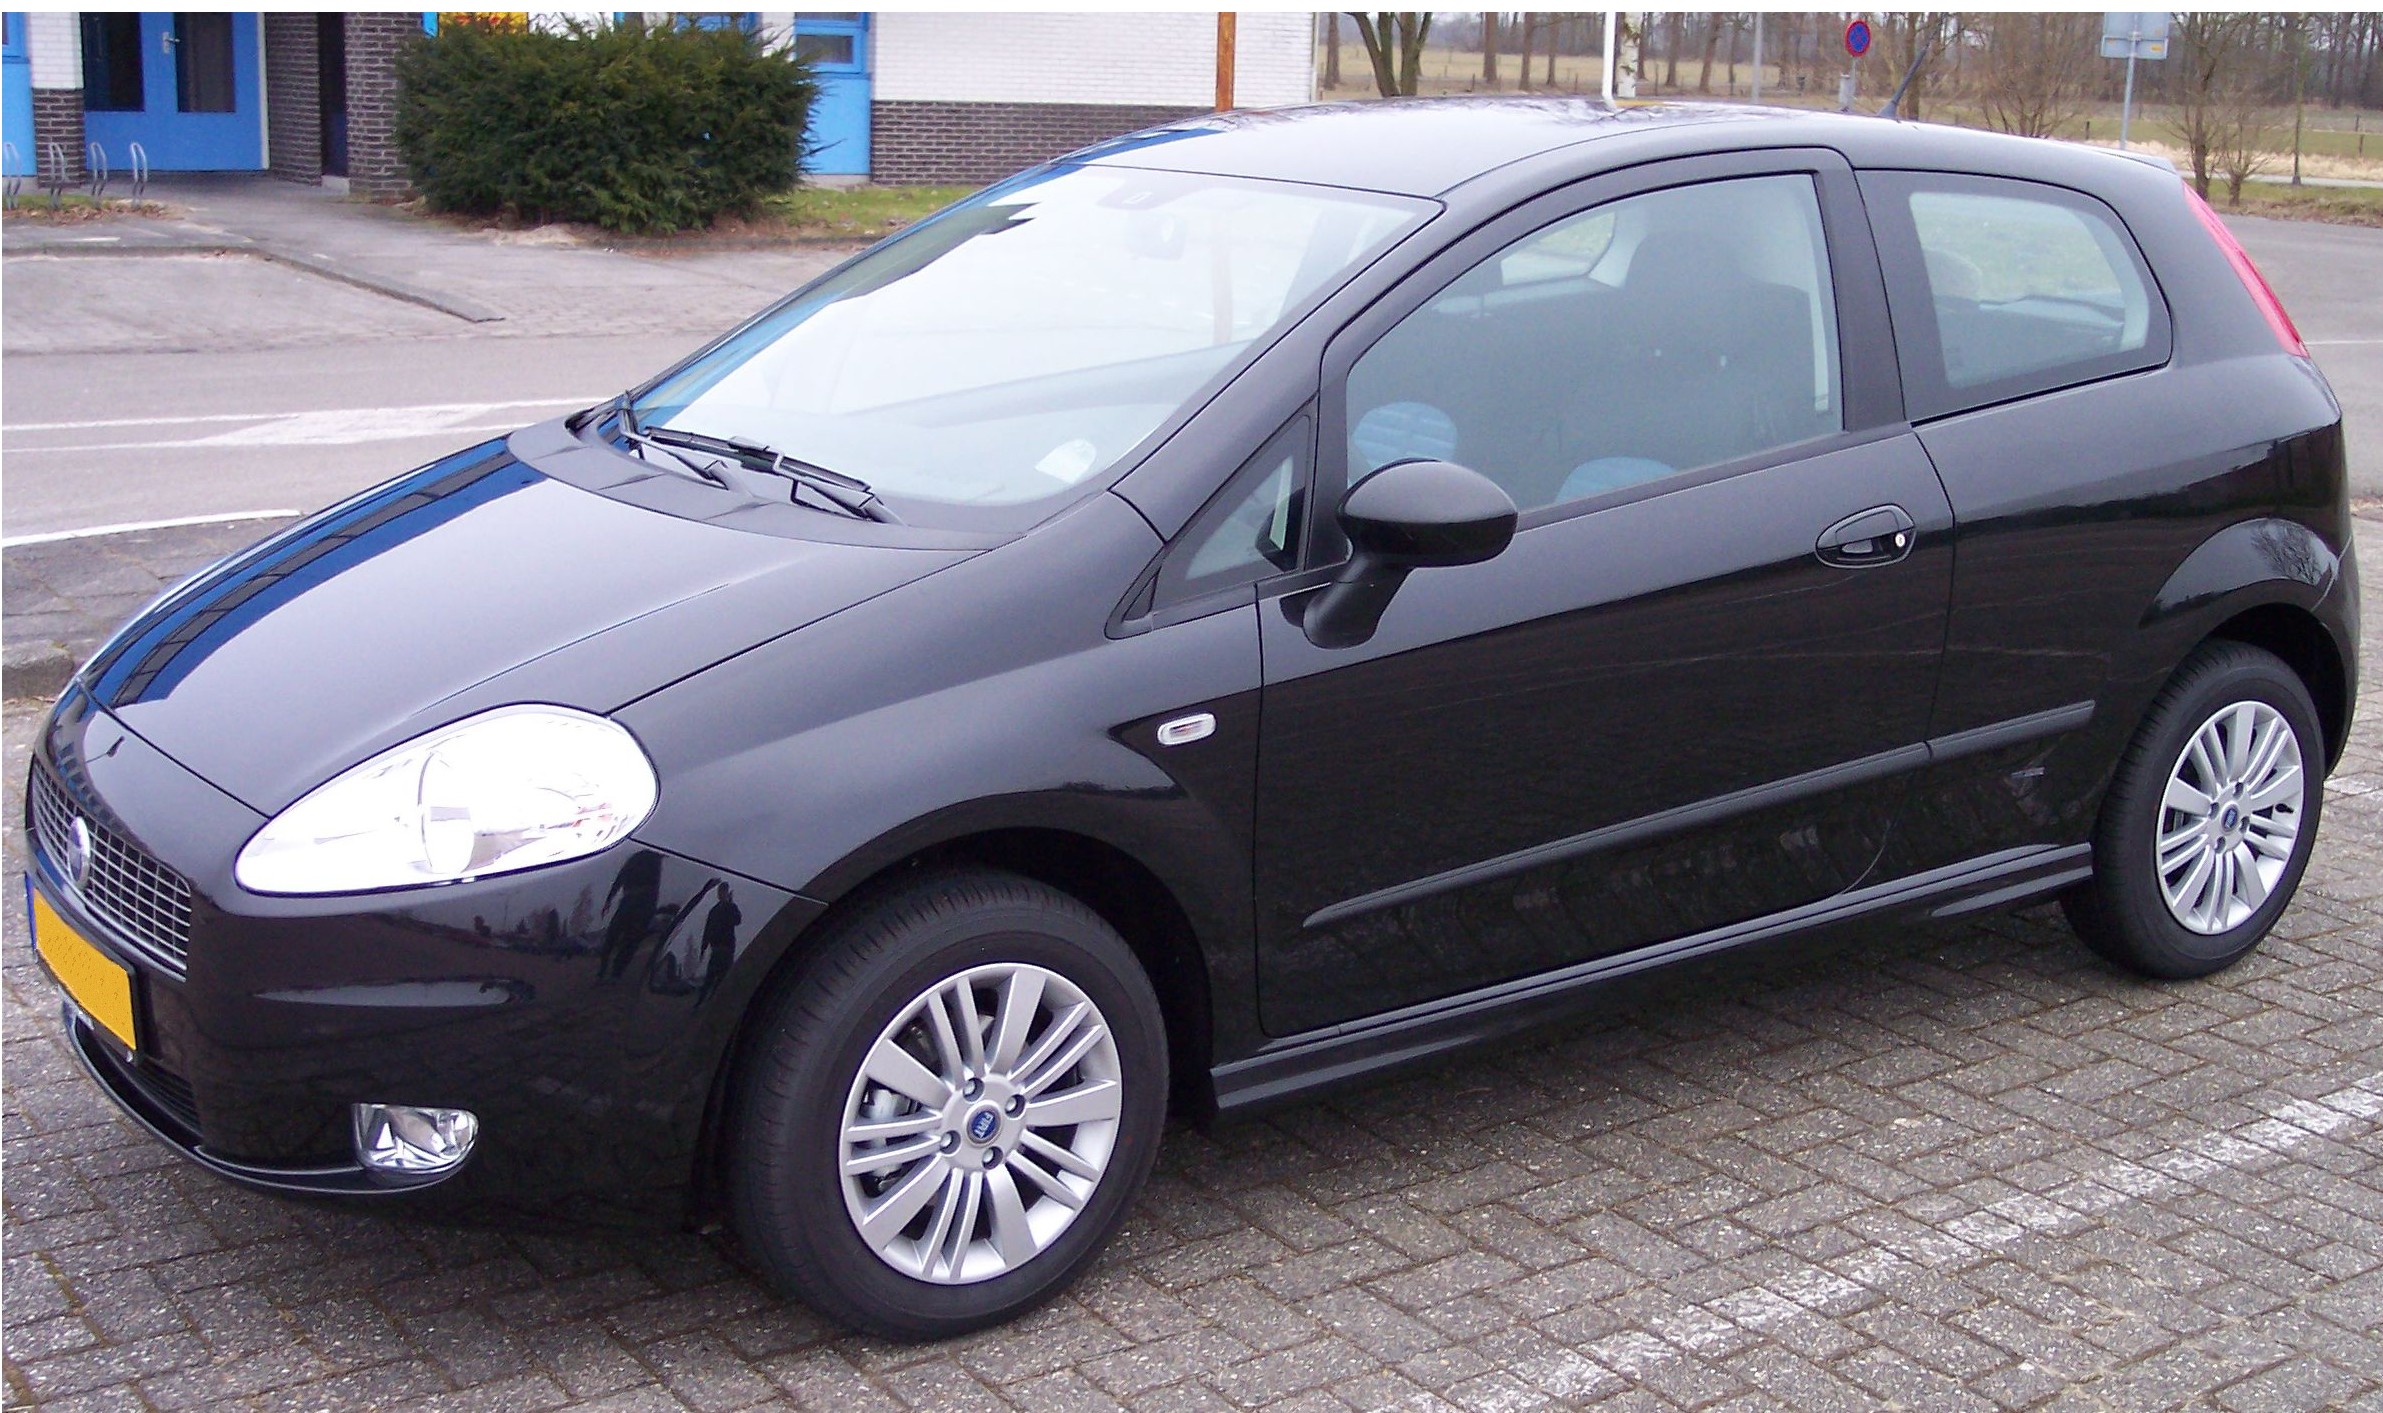 File:Fiat Punto 2006 vl black-edit.jpg - Wikimedia Commons